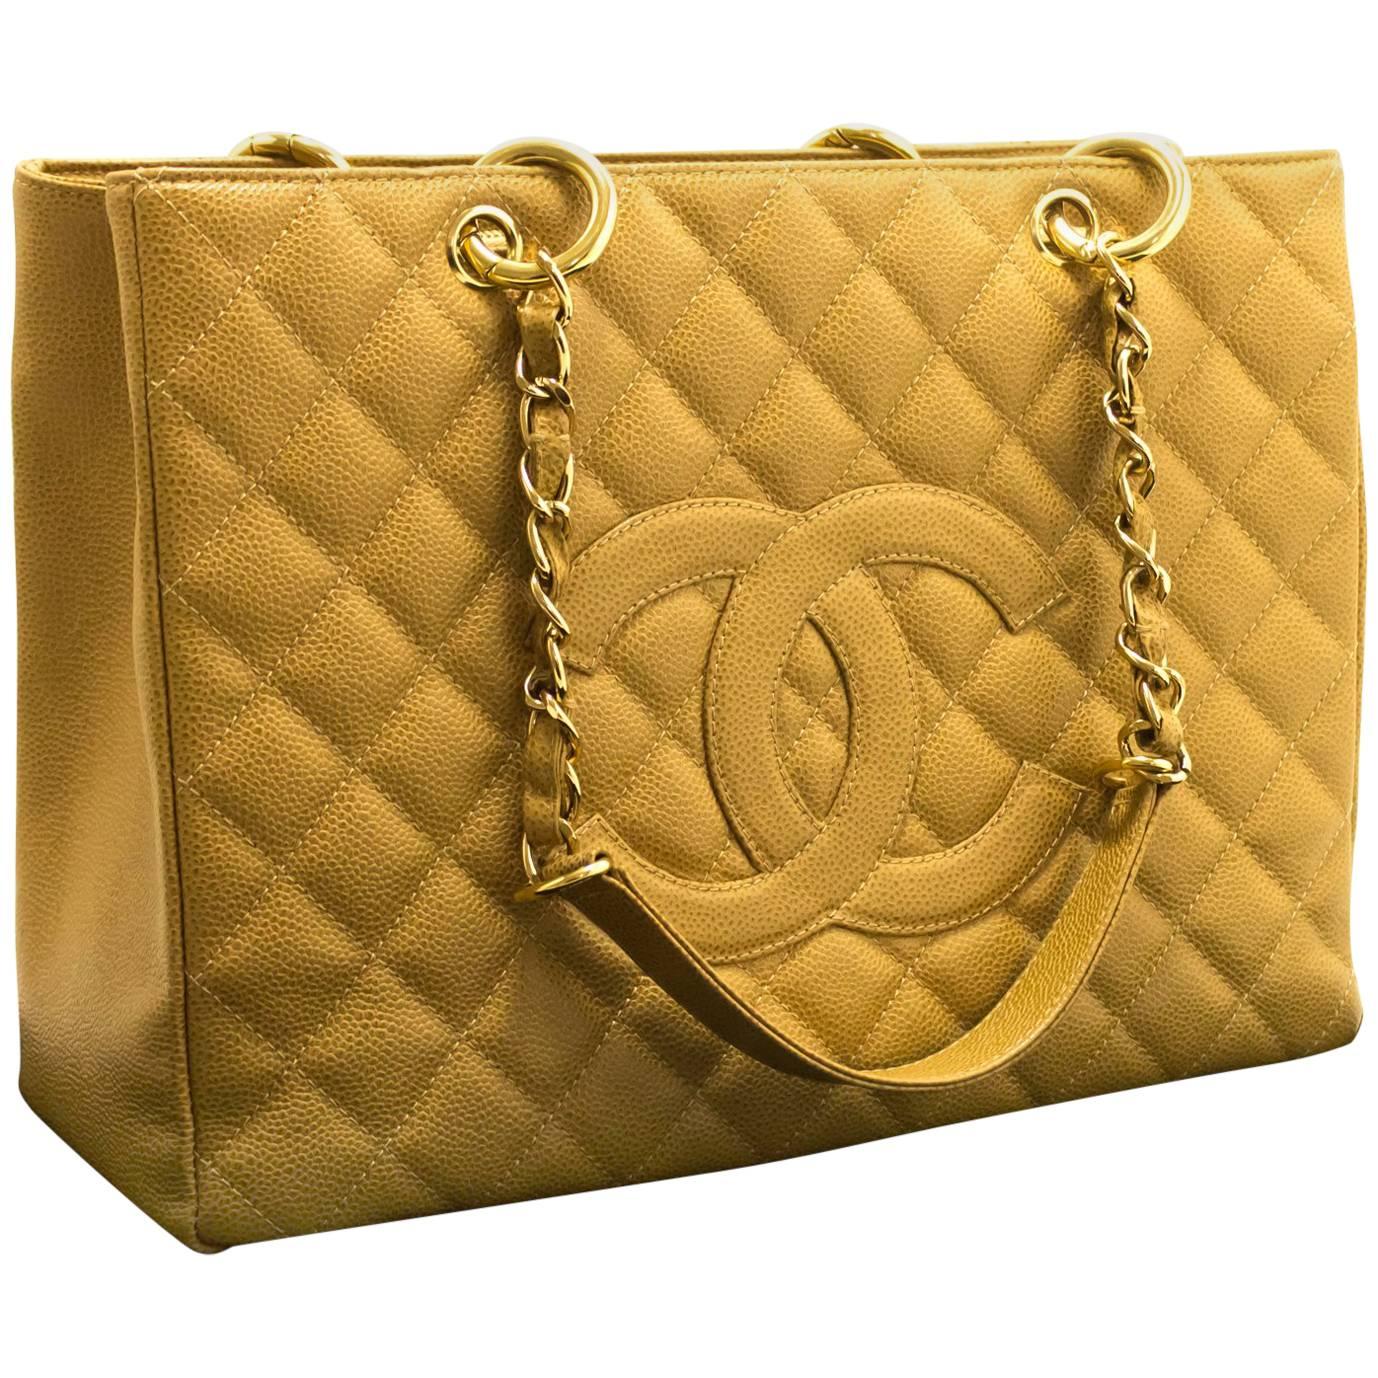 Chanel Caviar GST 13 Inch Beige Grand Shopping Tote Chain Shoulder Bag 